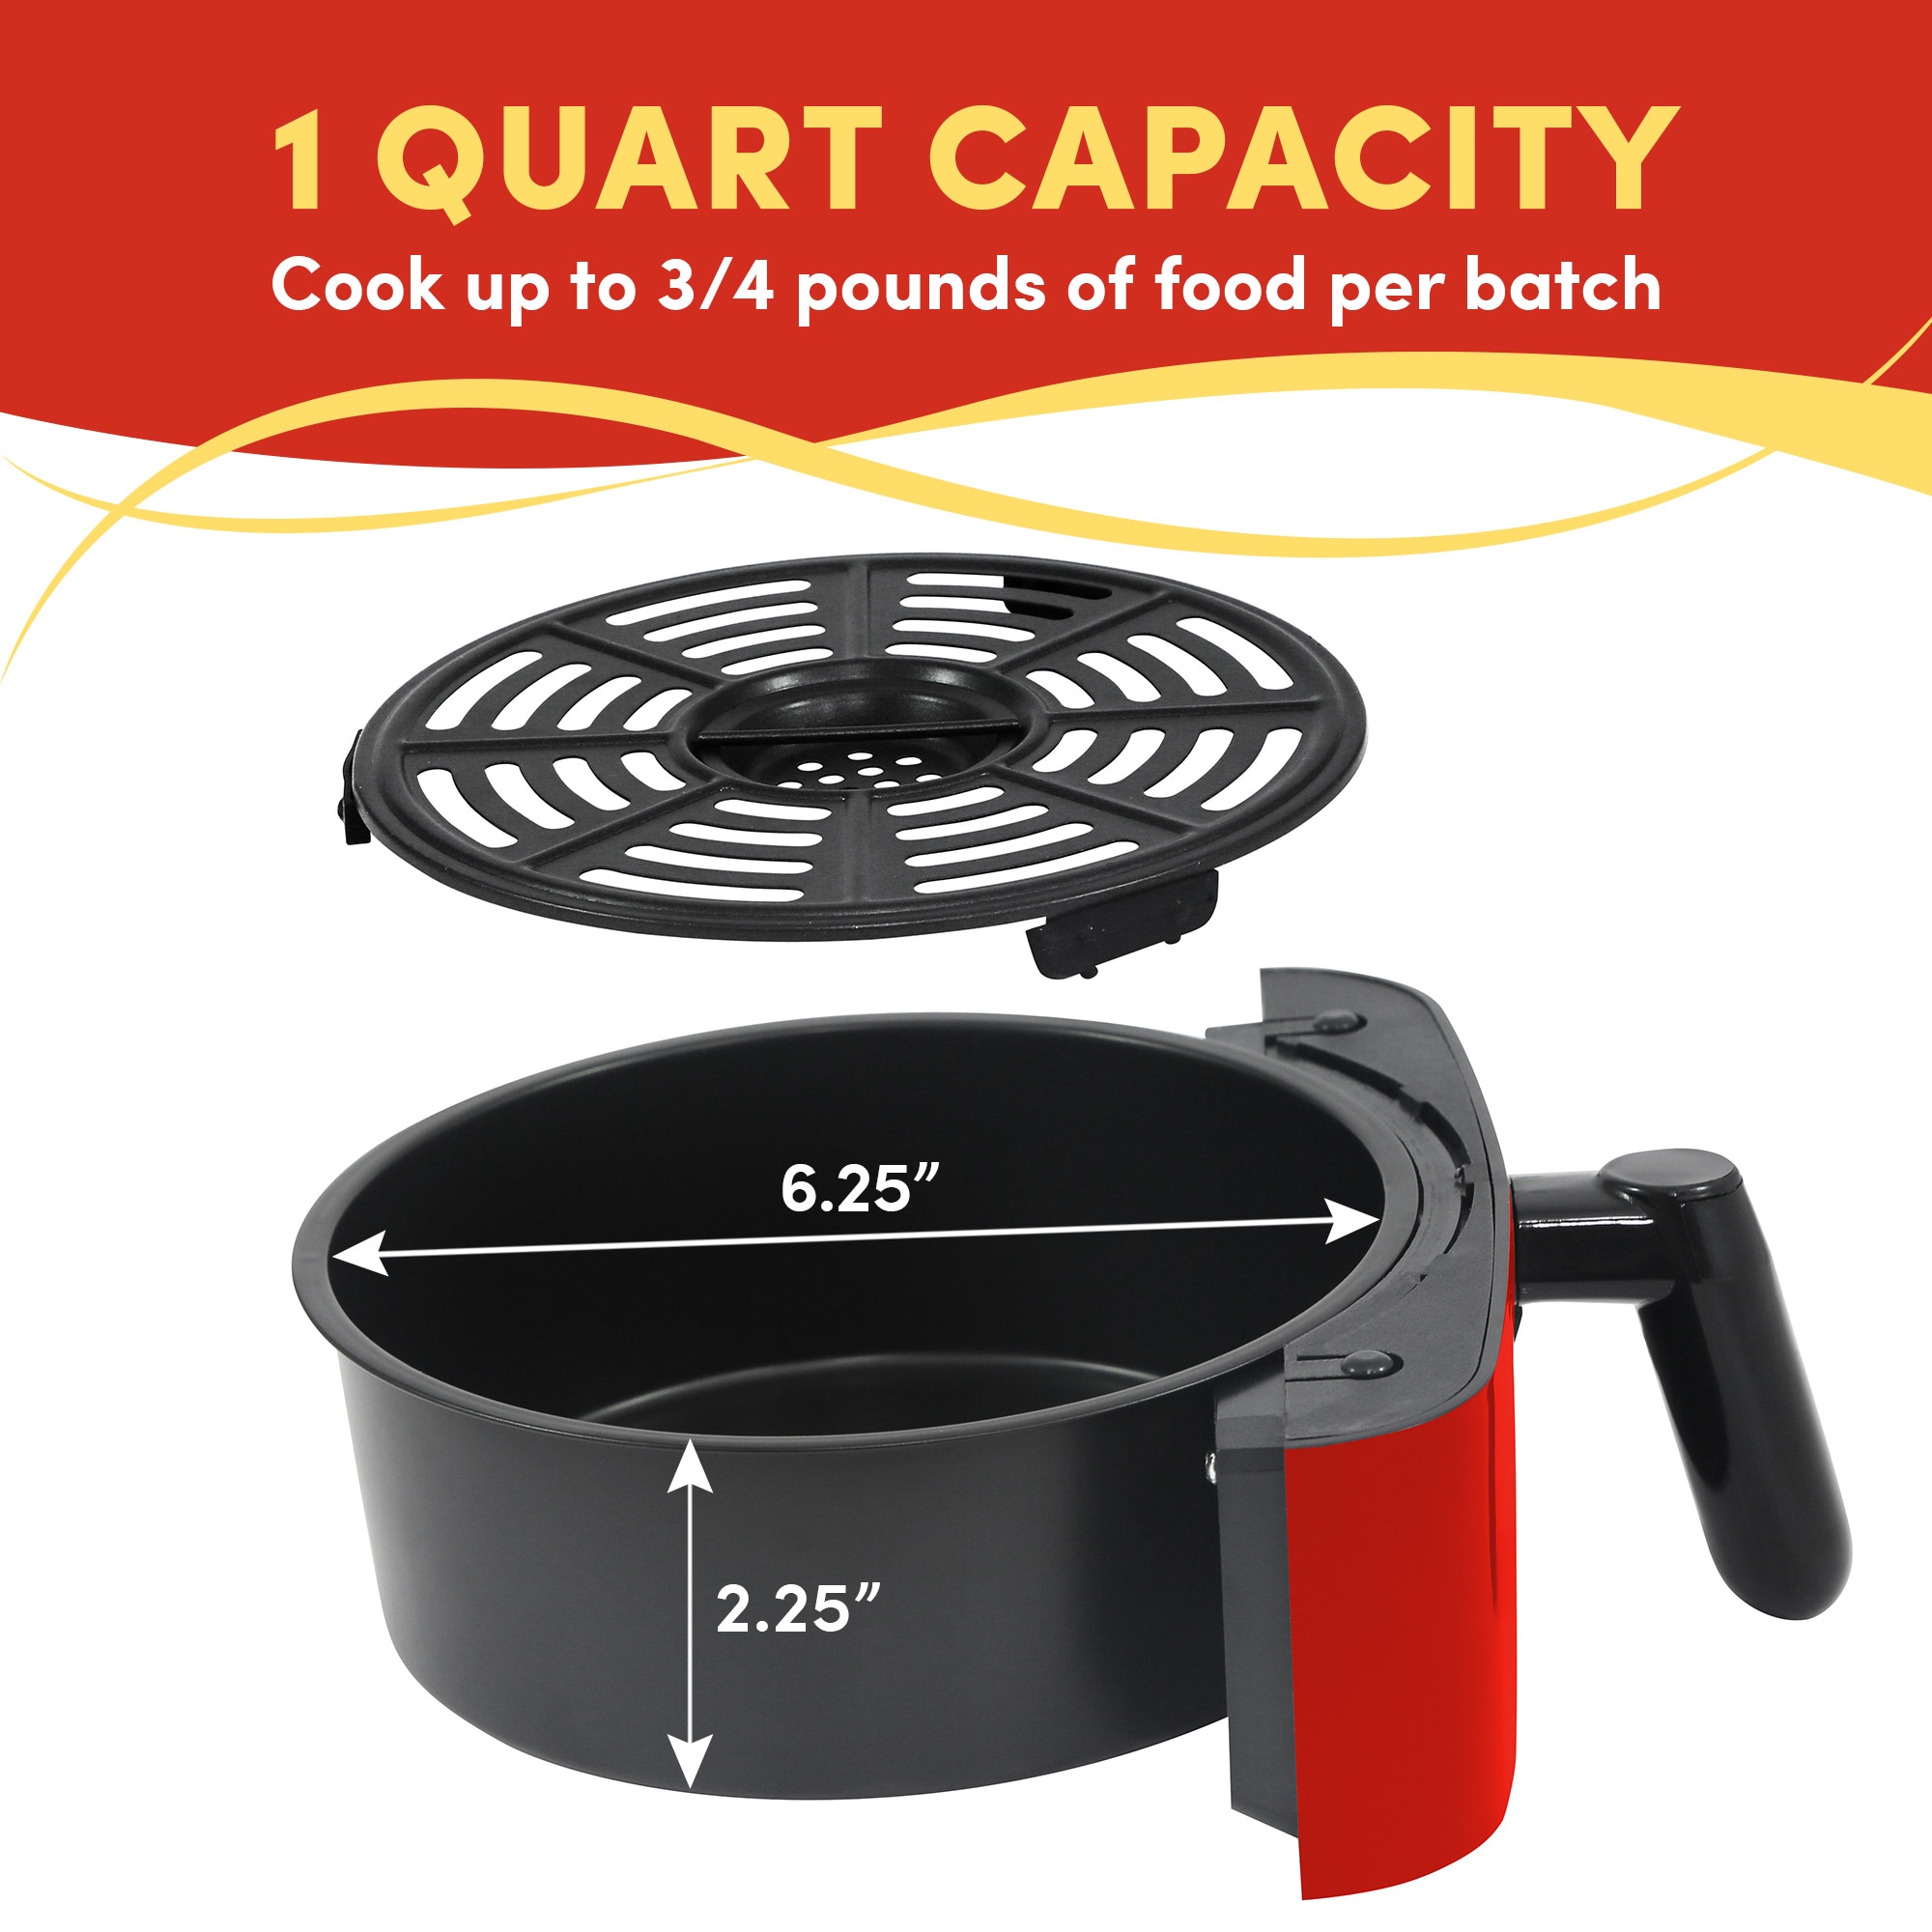 Buy Elite Gourmet® 6-Quart Air Fryer at S&S Worldwide